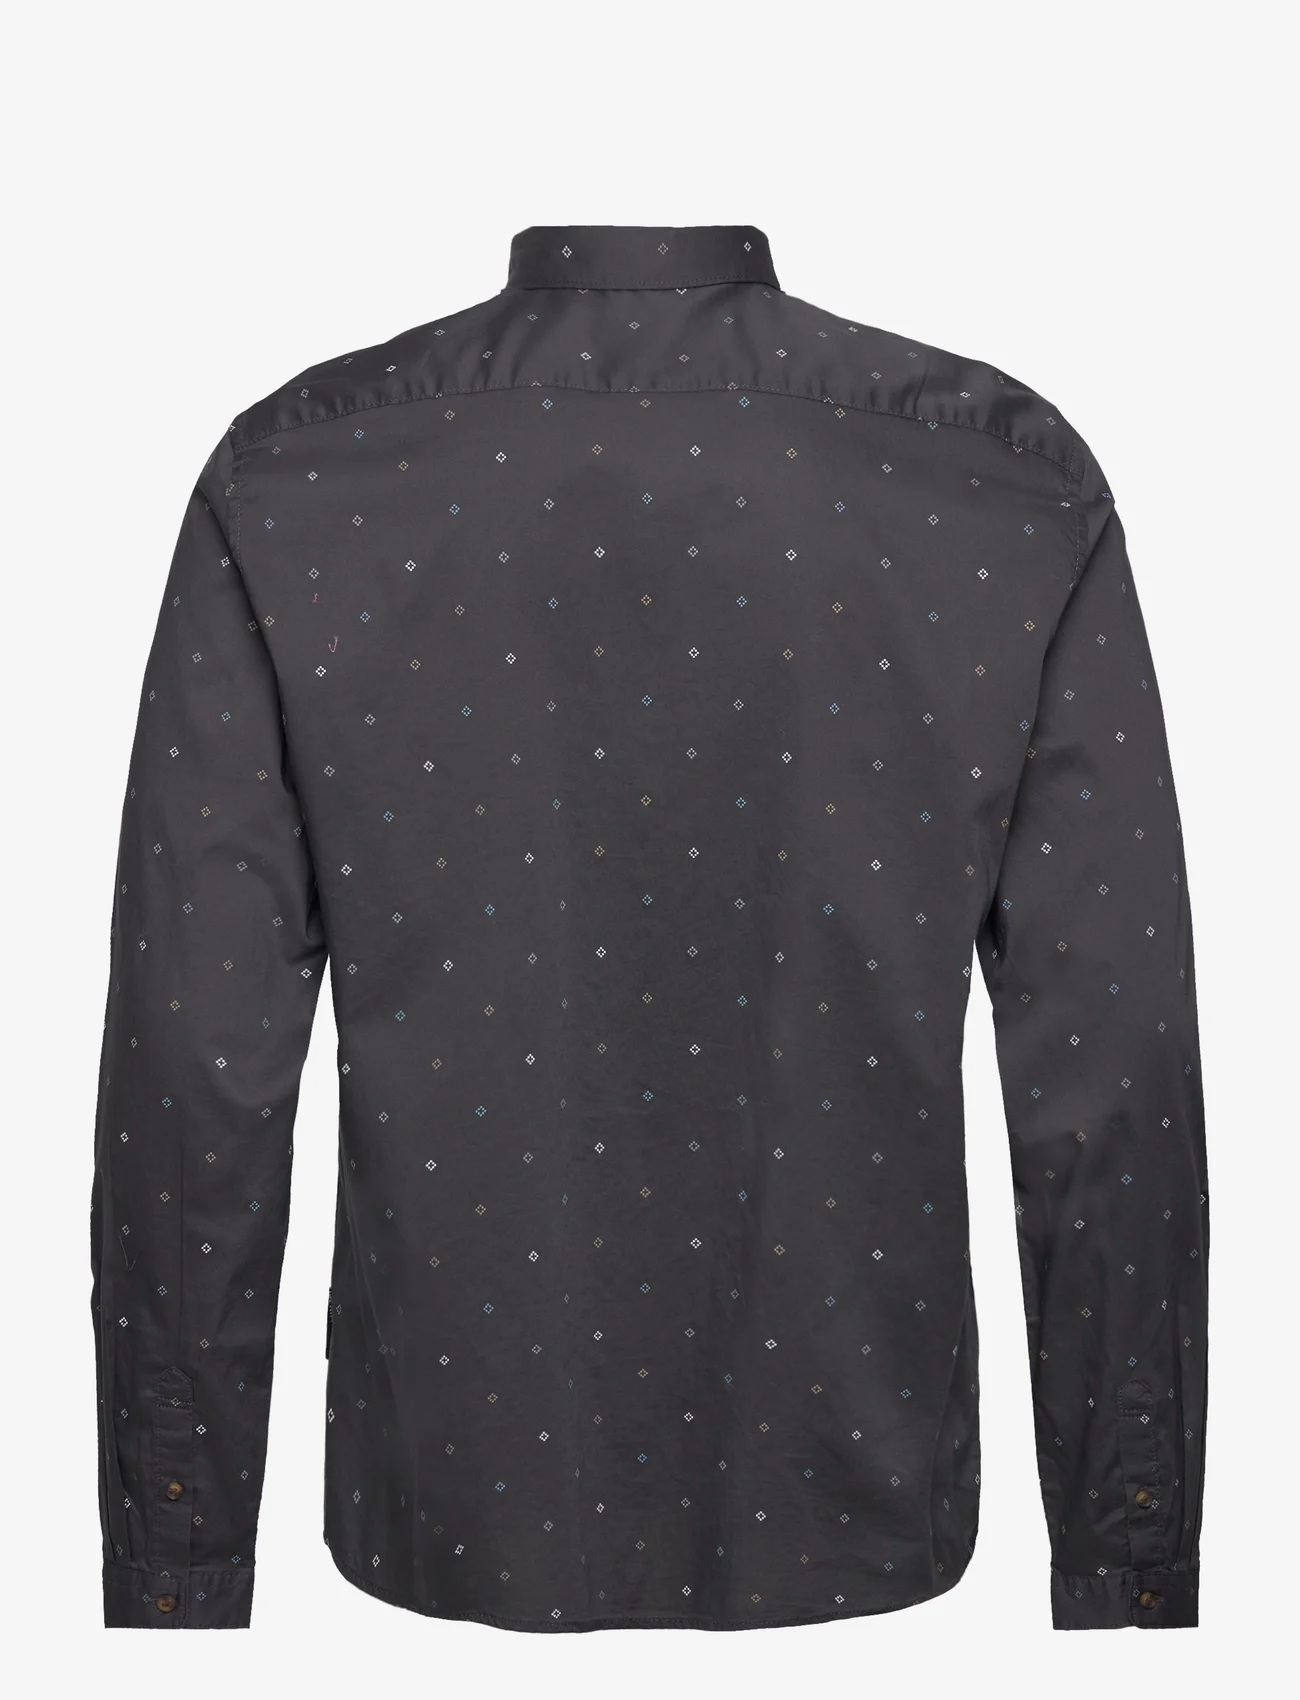 Tom Tailor - printed shirt - die niedrigsten preise - blue pixel diamond print - 1